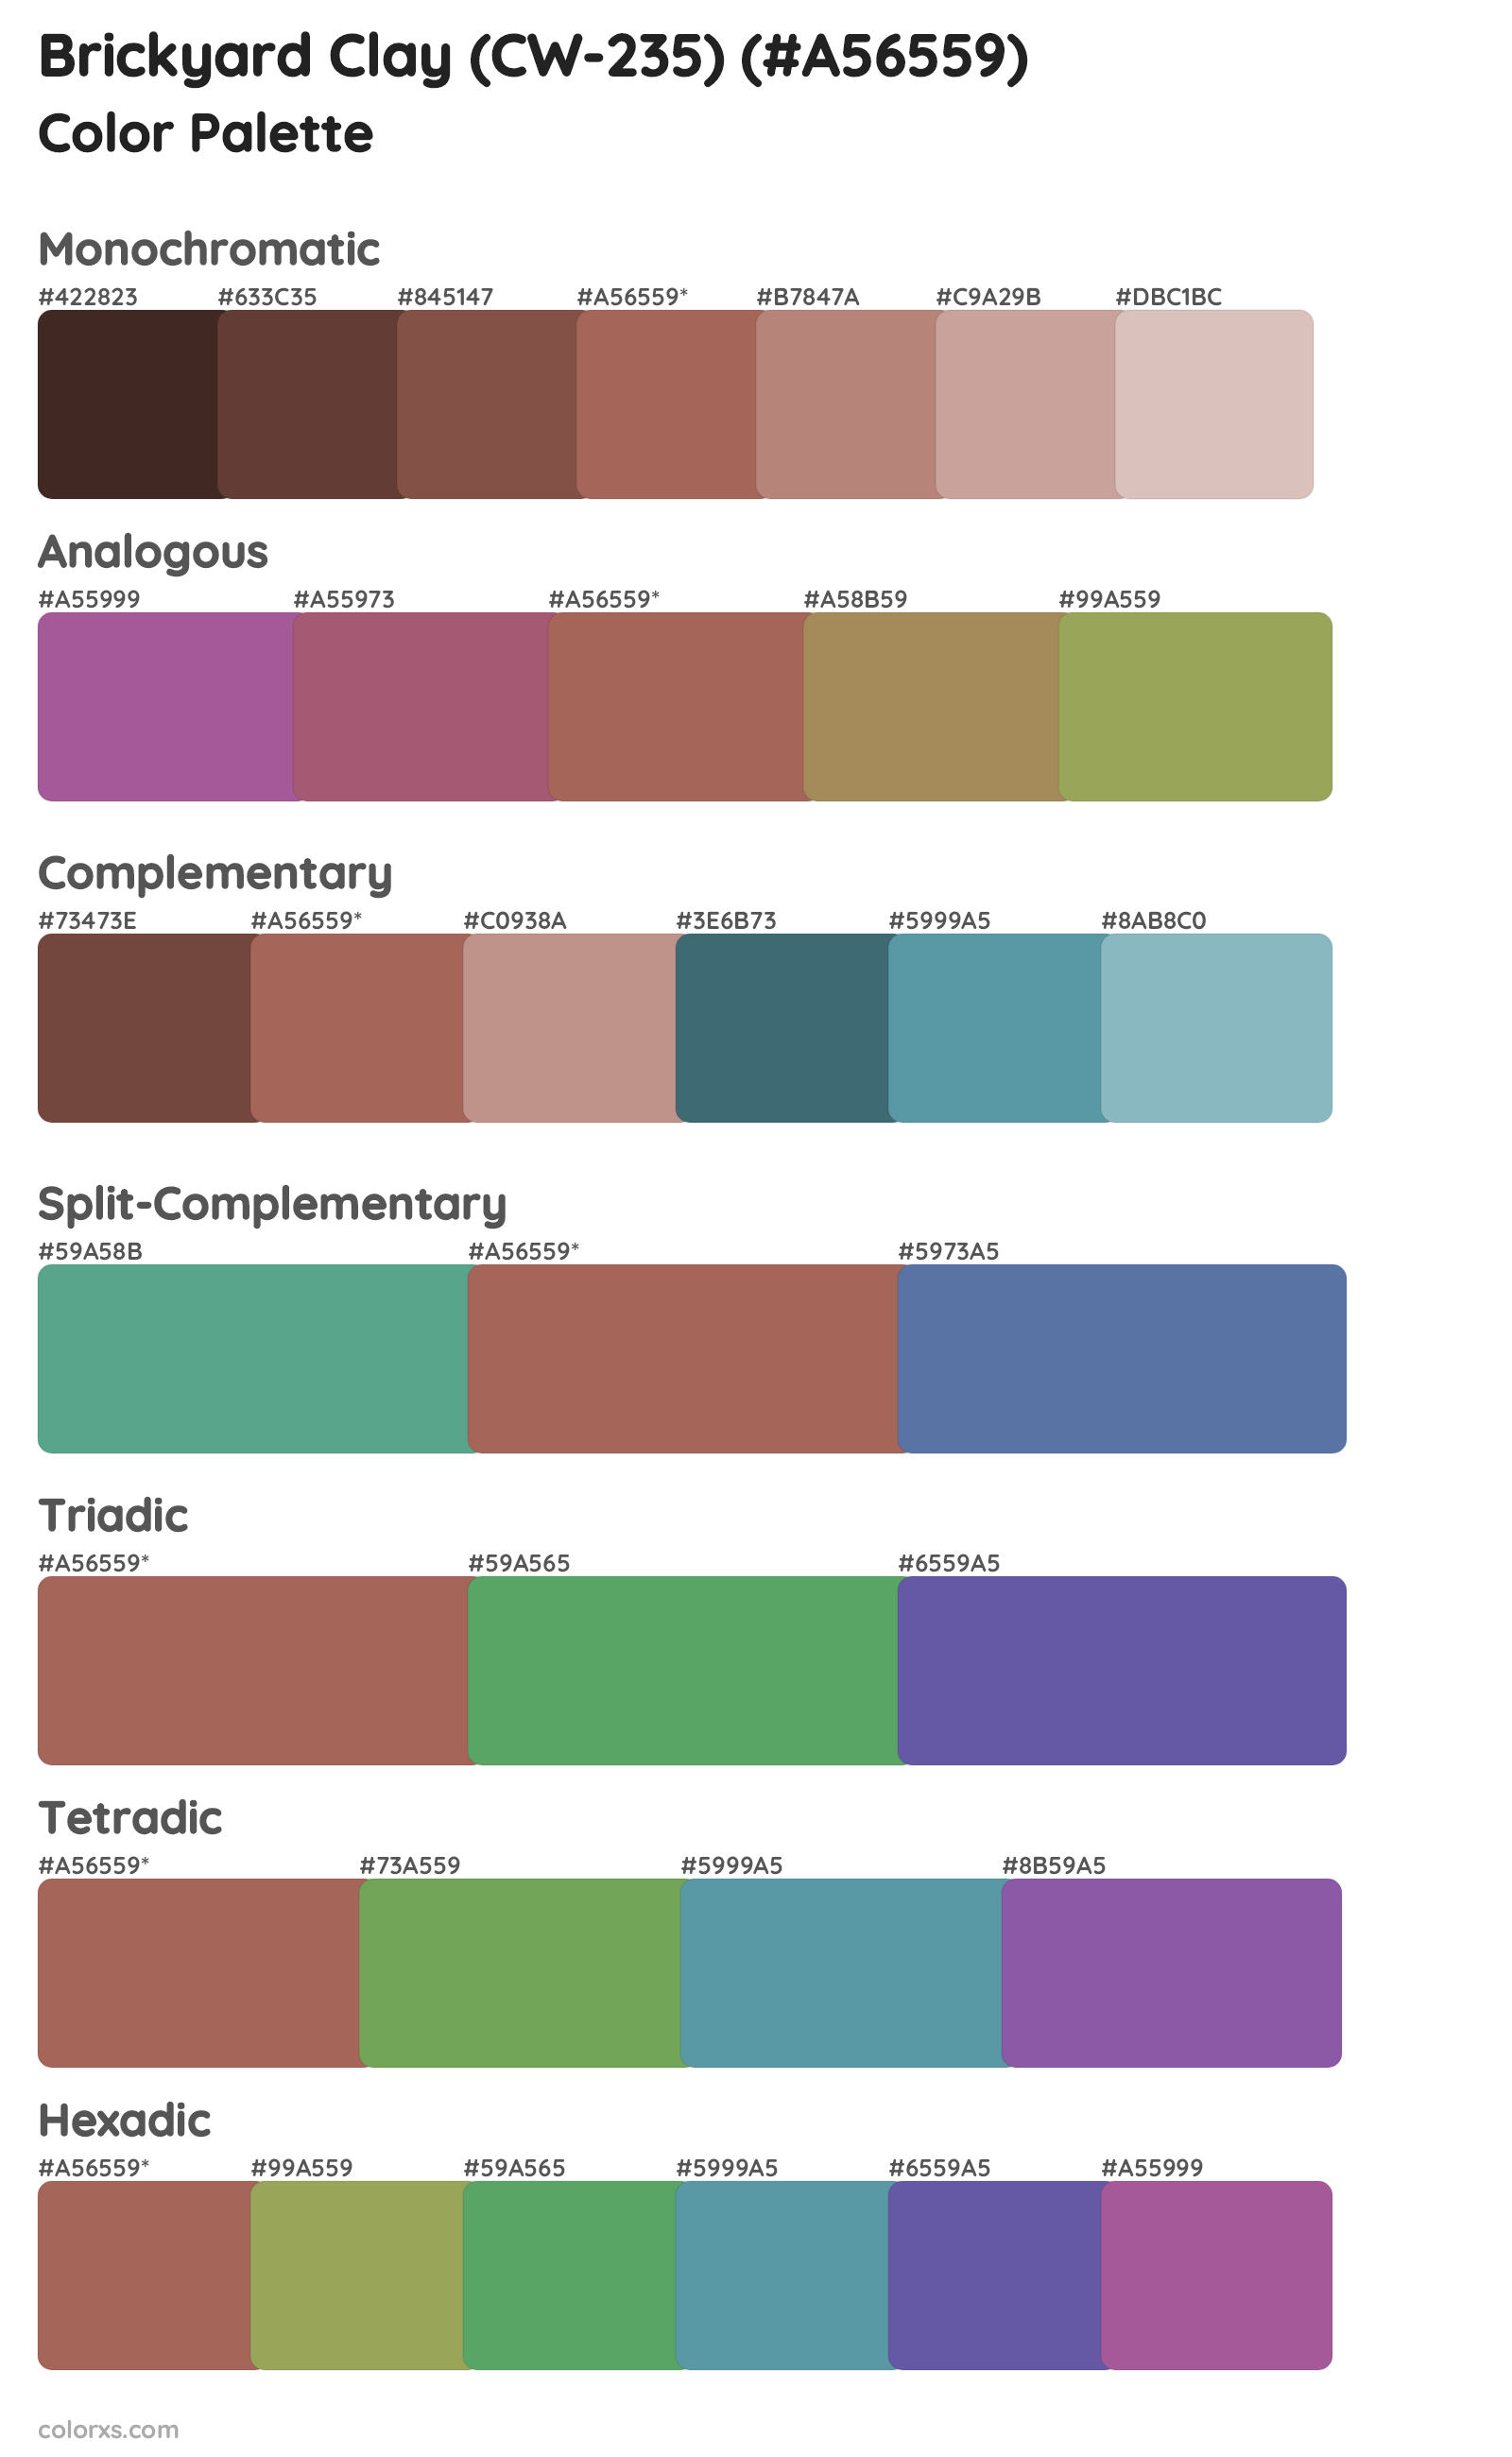 Brickyard Clay (CW-235) Color Scheme Palettes